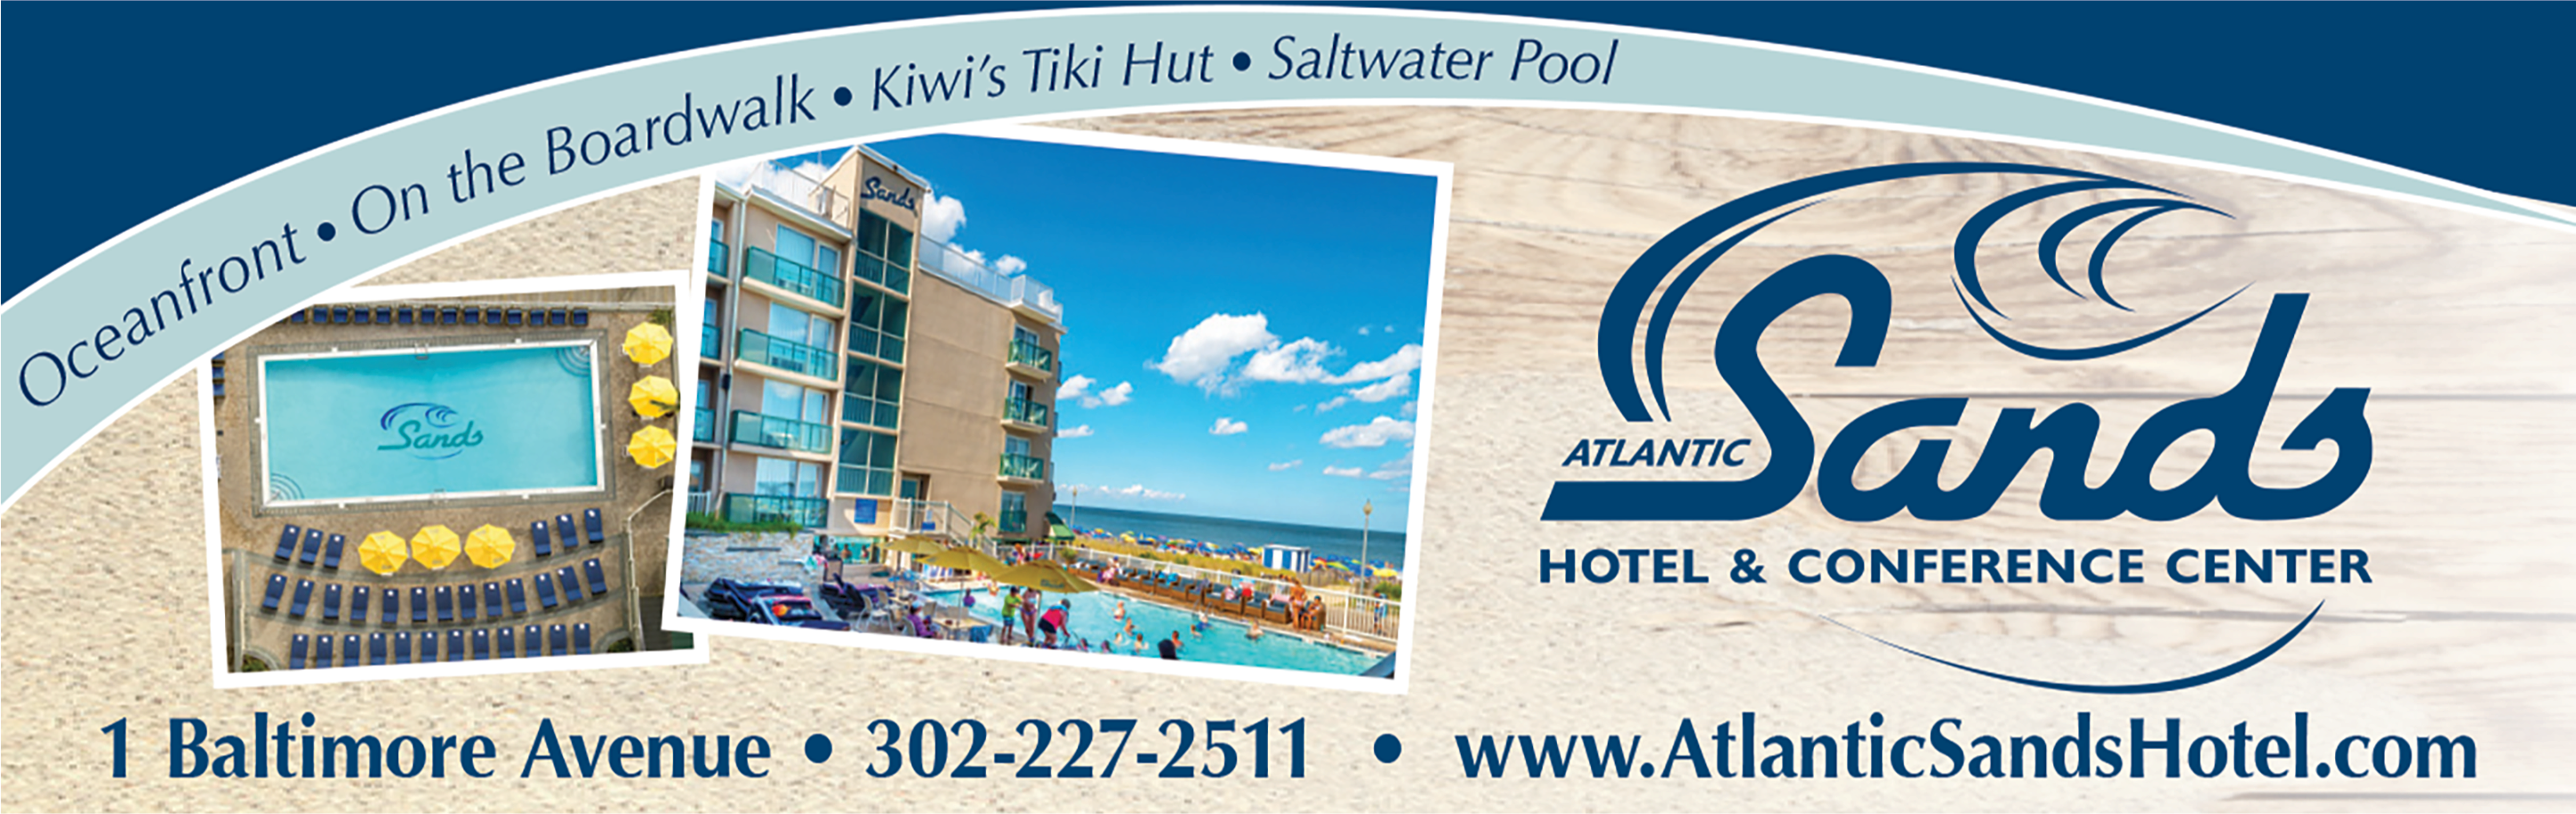 Atlantic Sands Hotel & Conference Center Print Ad